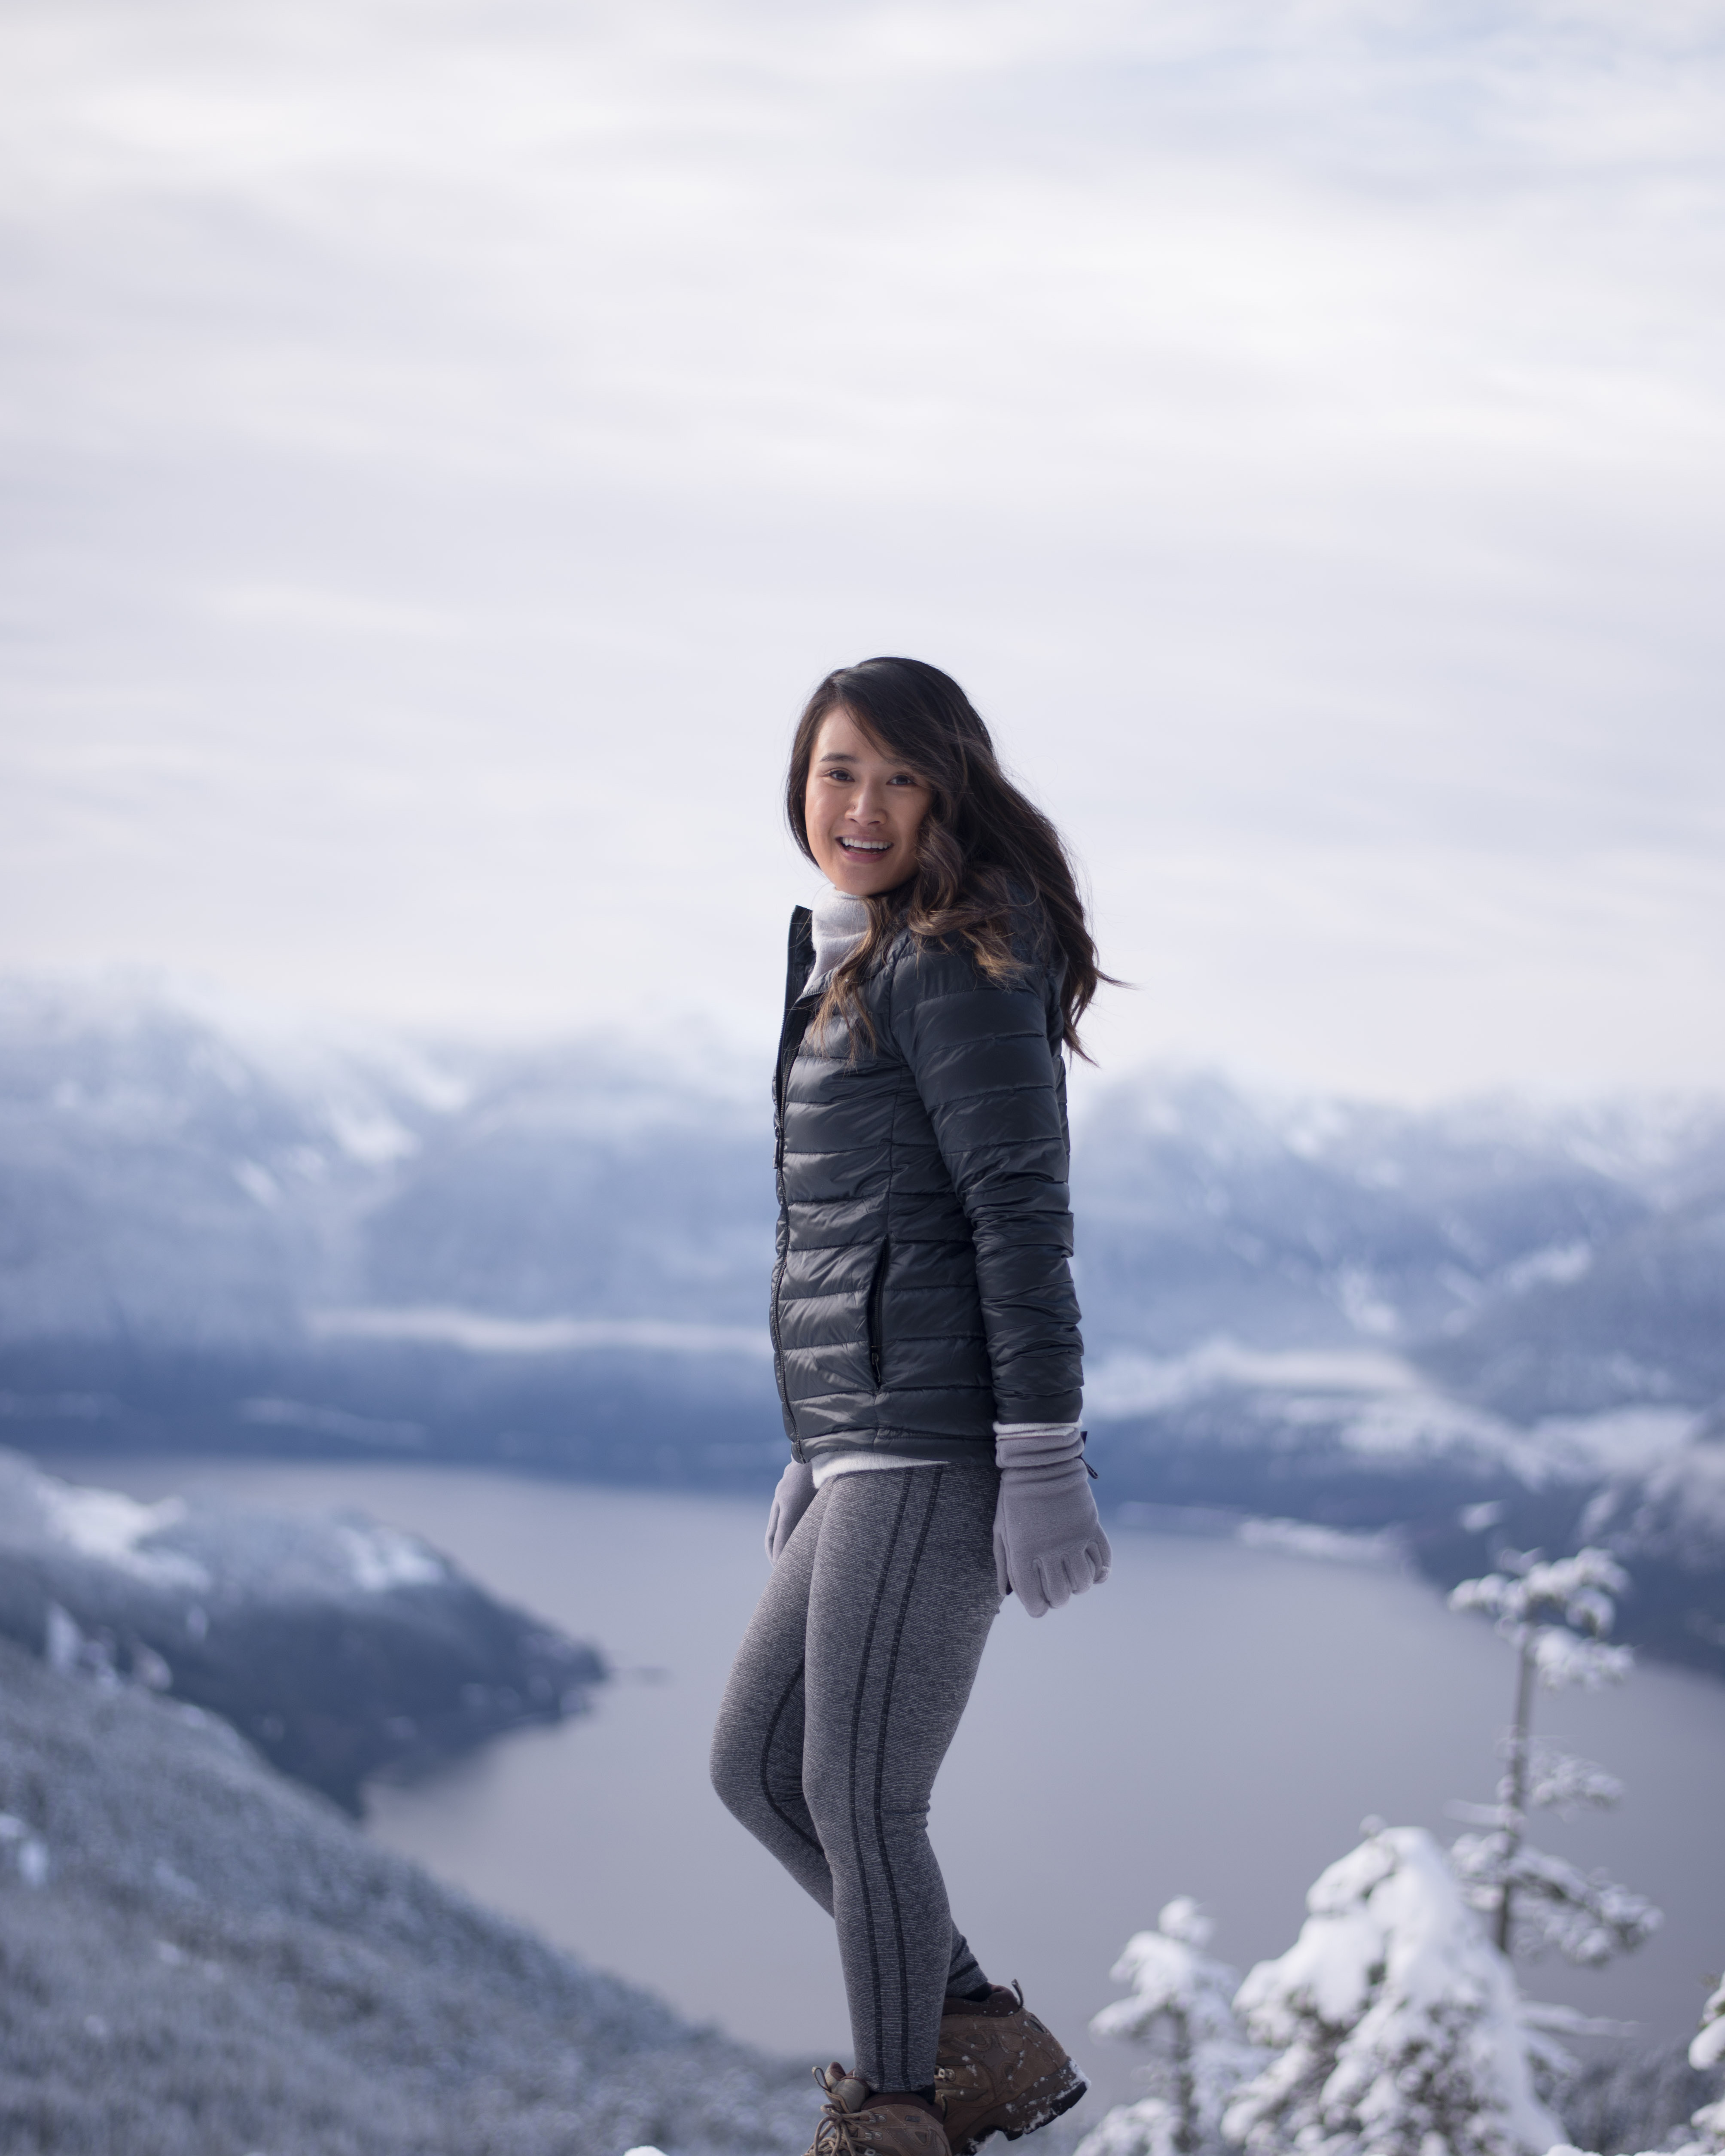 Hiking and snowshoeing at Sea to Sky Gondola in Squamish, British Columbia #explorecanada #camandtay